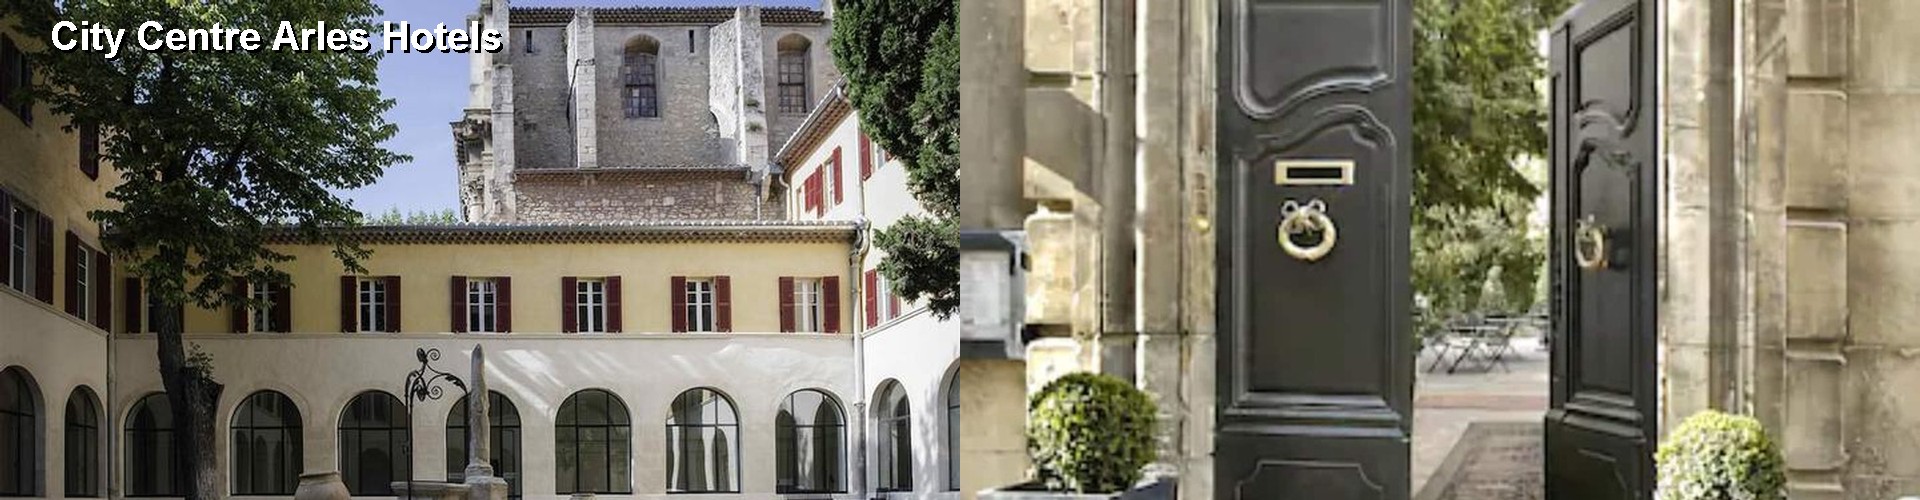 5 Best Hotels near City Centre Arles